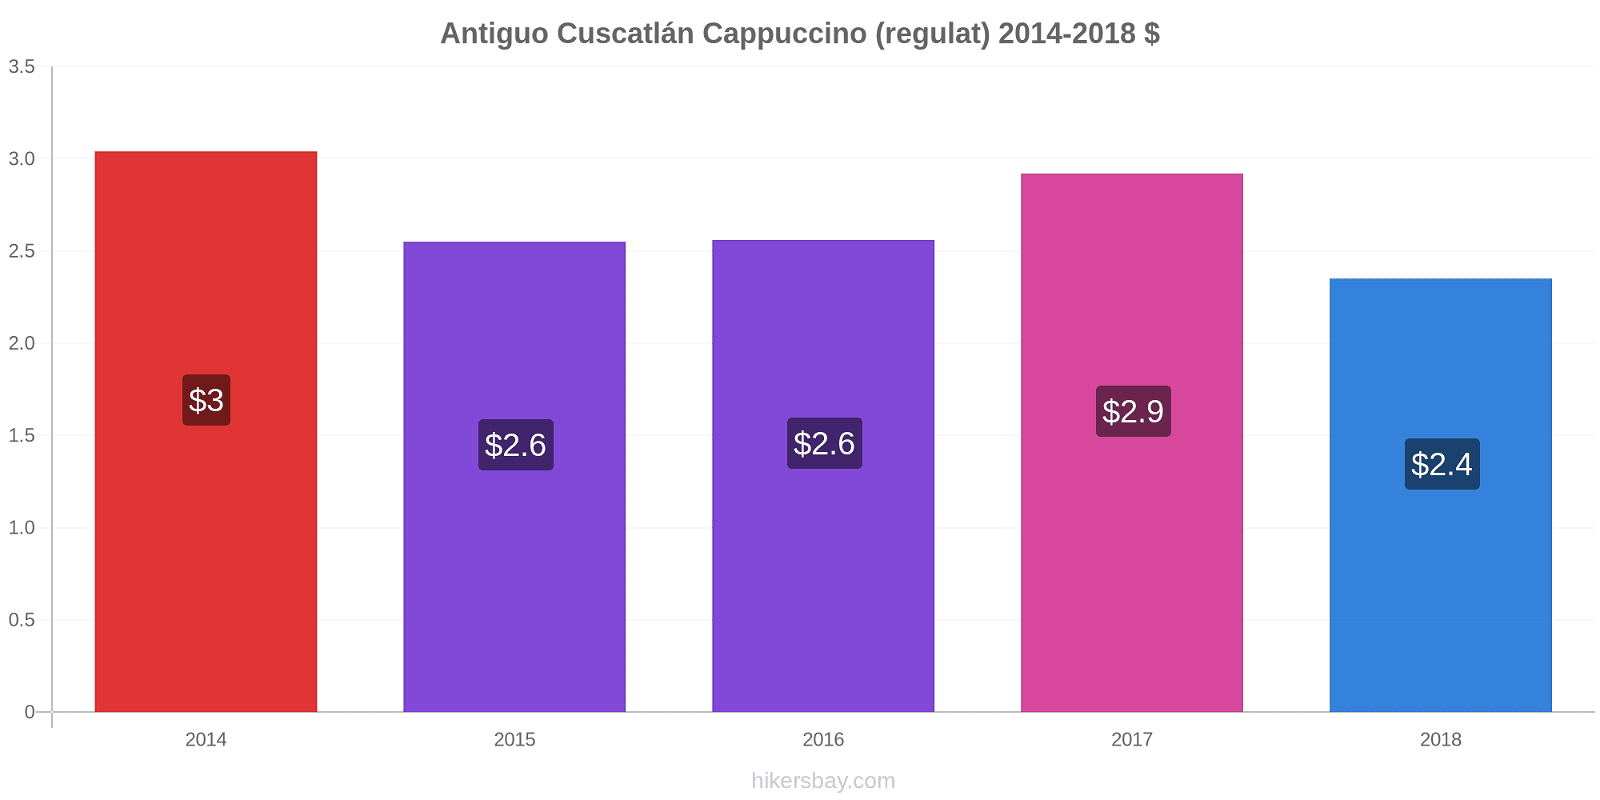 Antiguo Cuscatlán modificări de preț Cappuccino (regulat) hikersbay.com